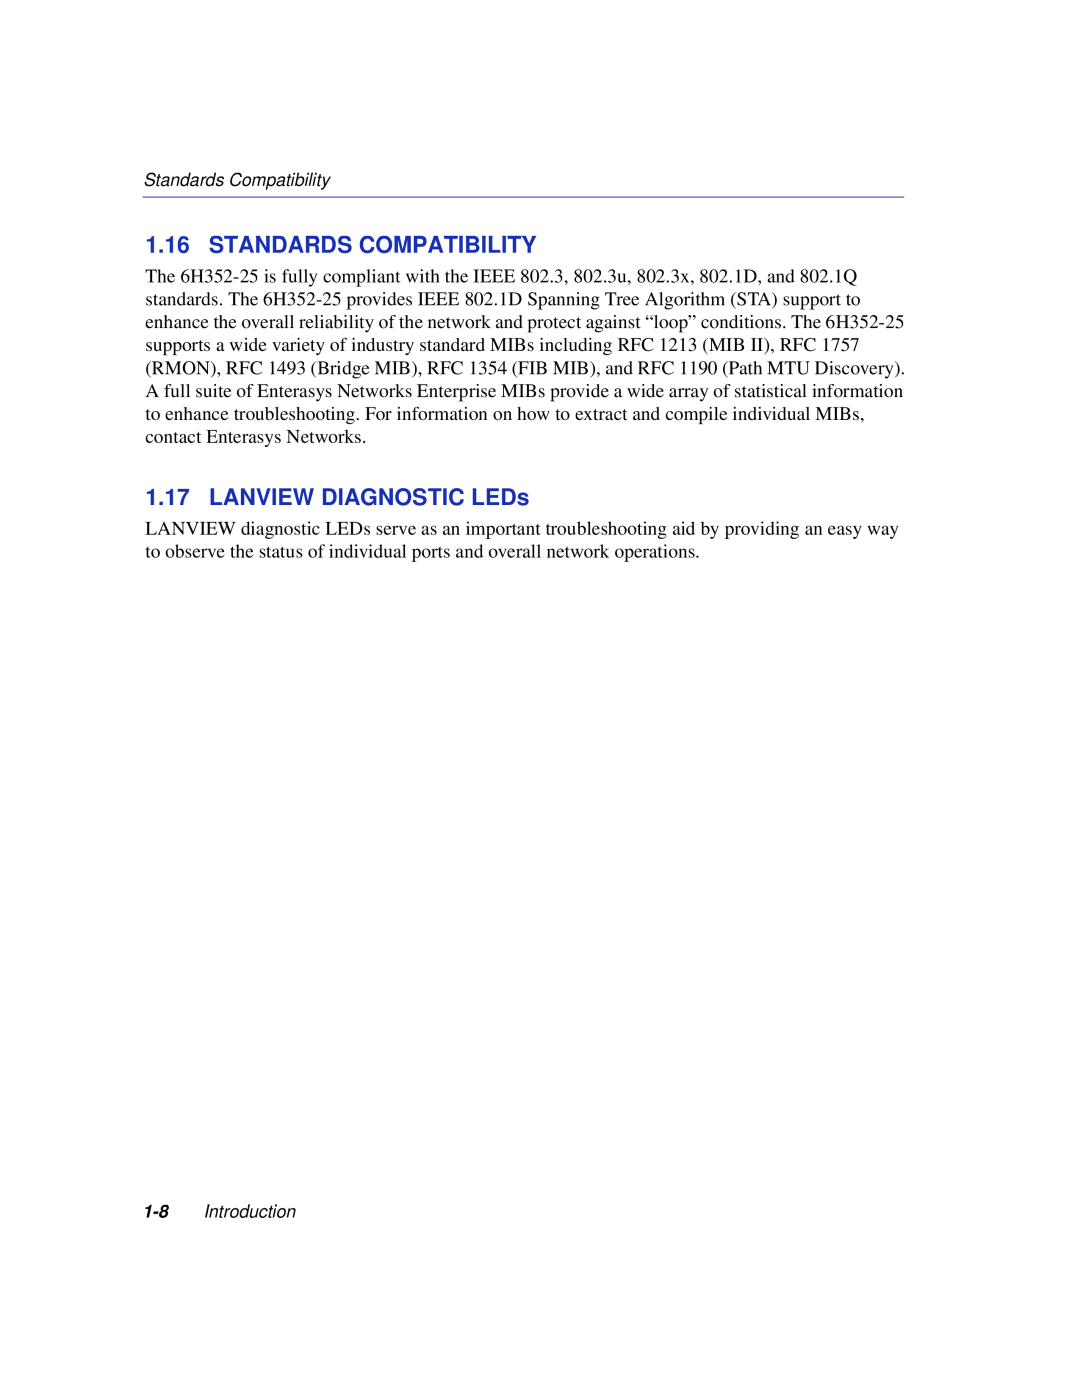 Enterasys Networks 6H352-25 manual Standards Compatibility, LANVIEW DIAGNOSTIC LEDs, Introduction 